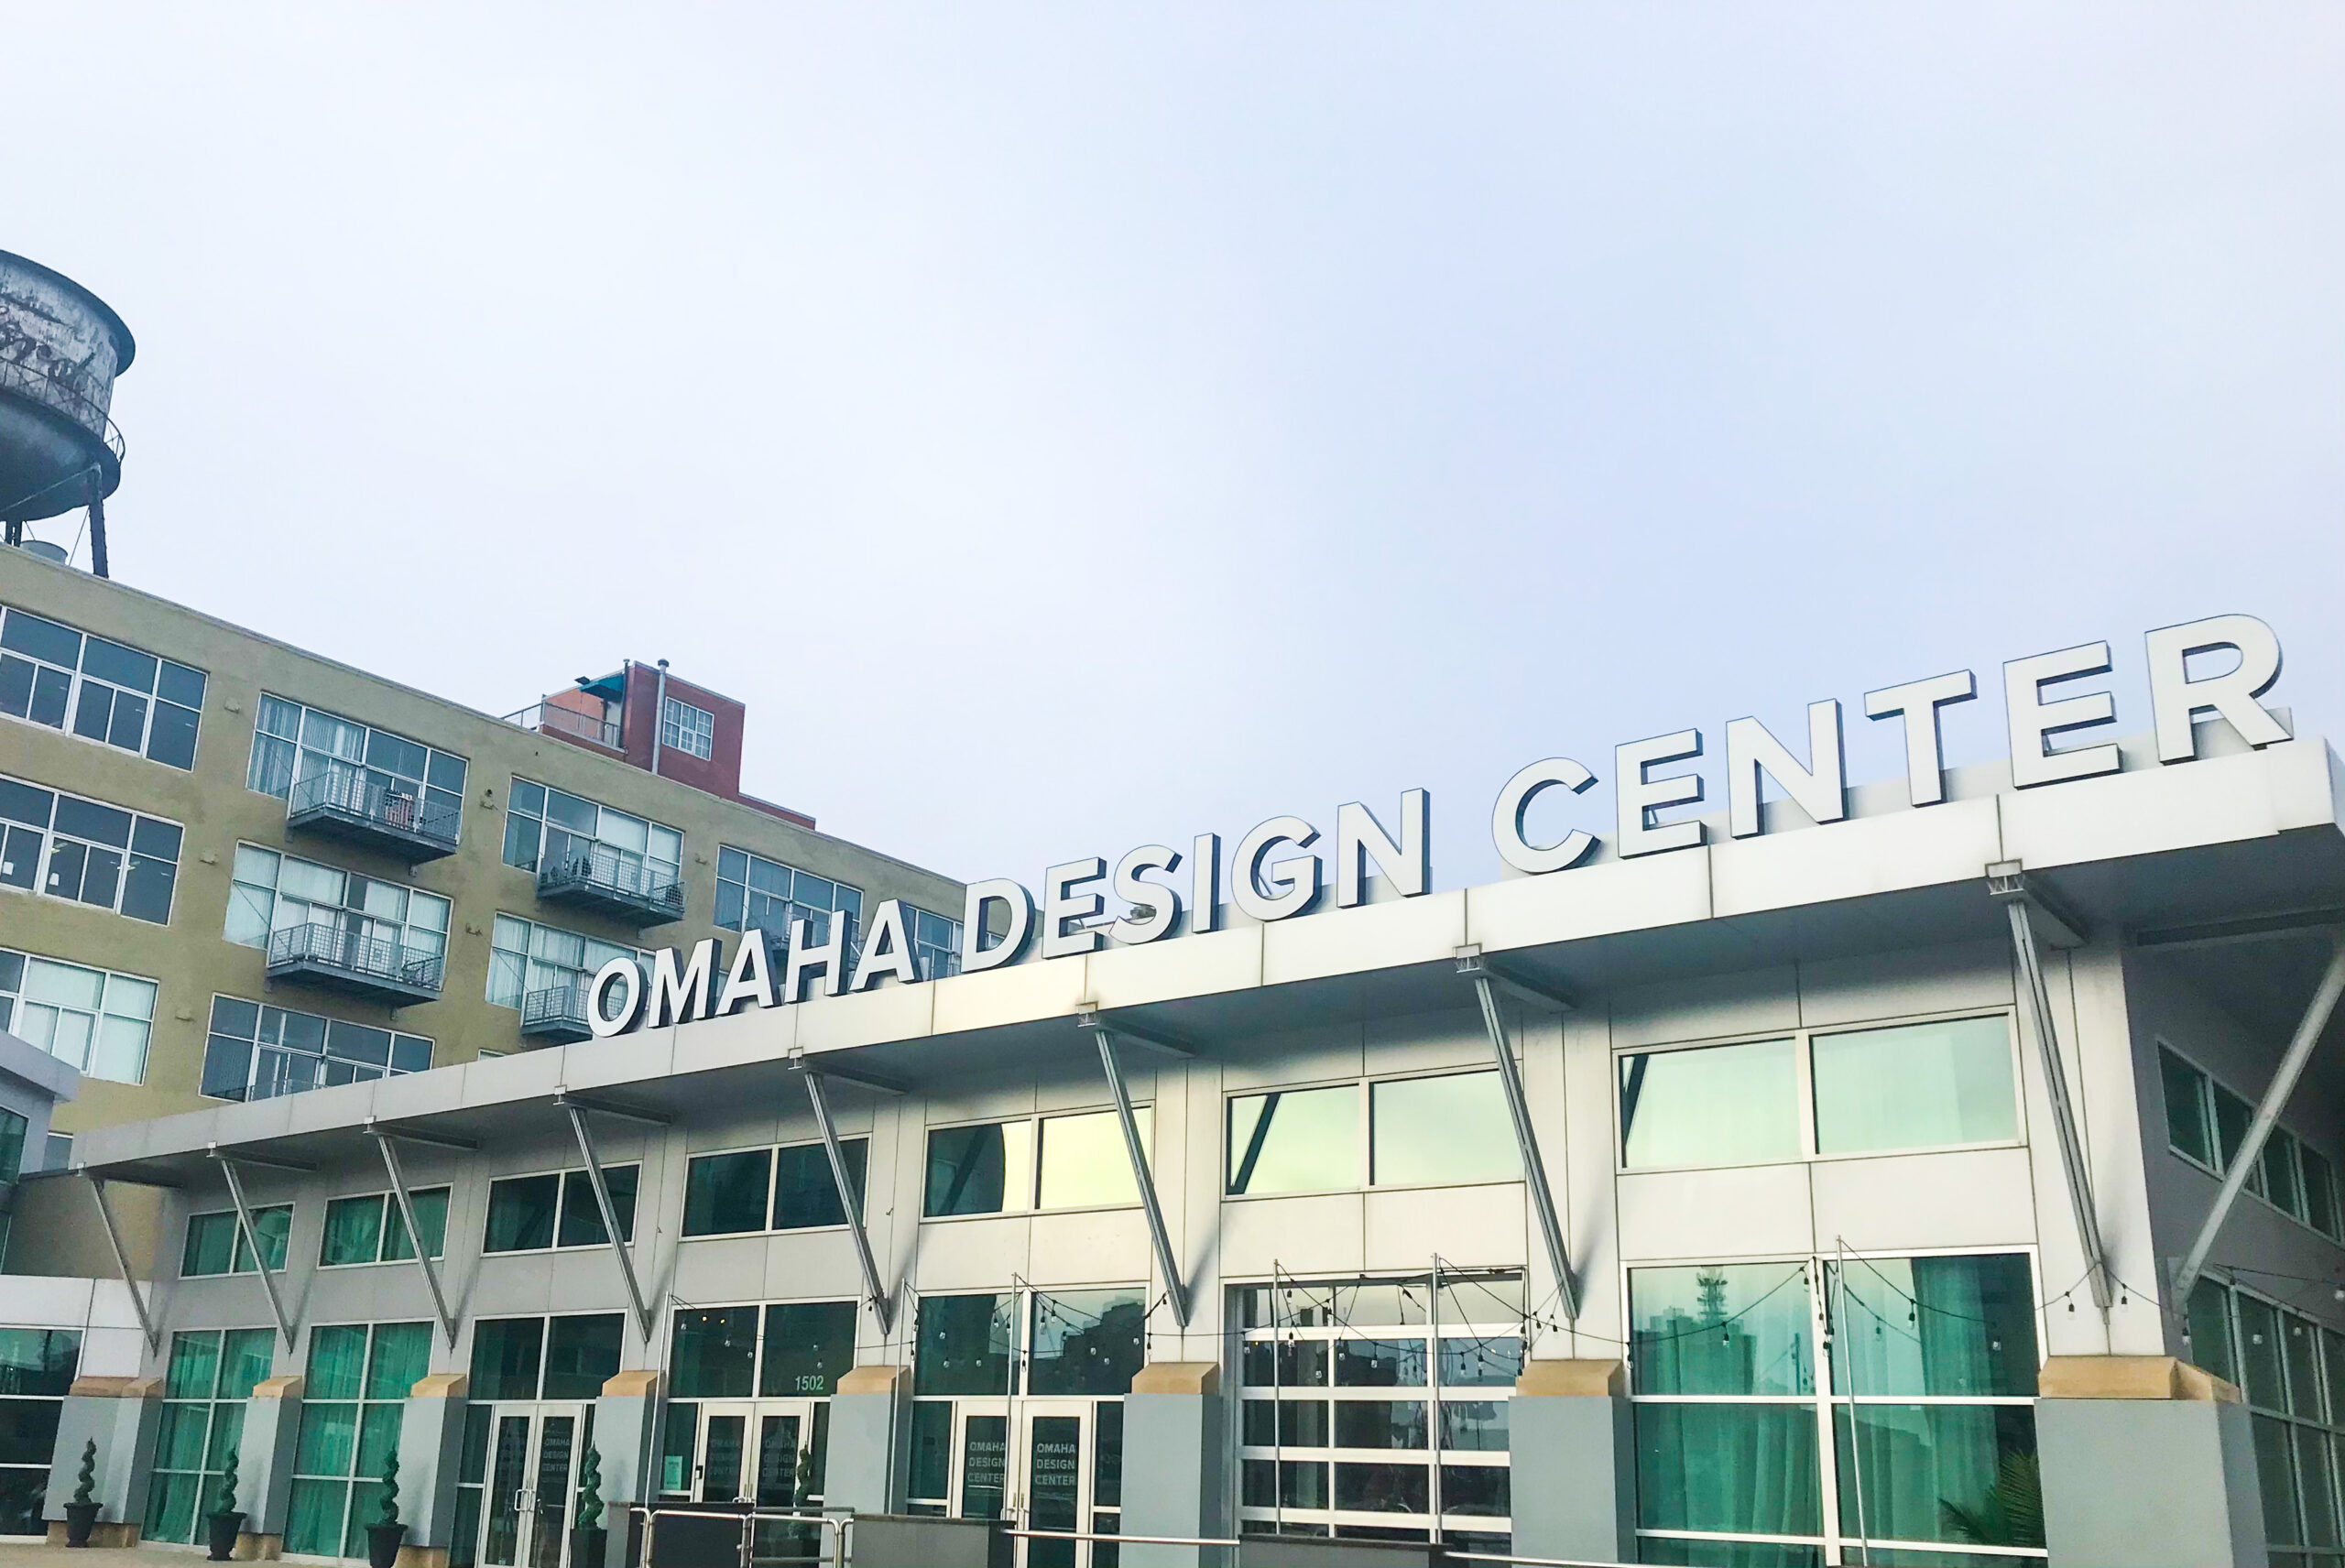 Omaha Design Center building